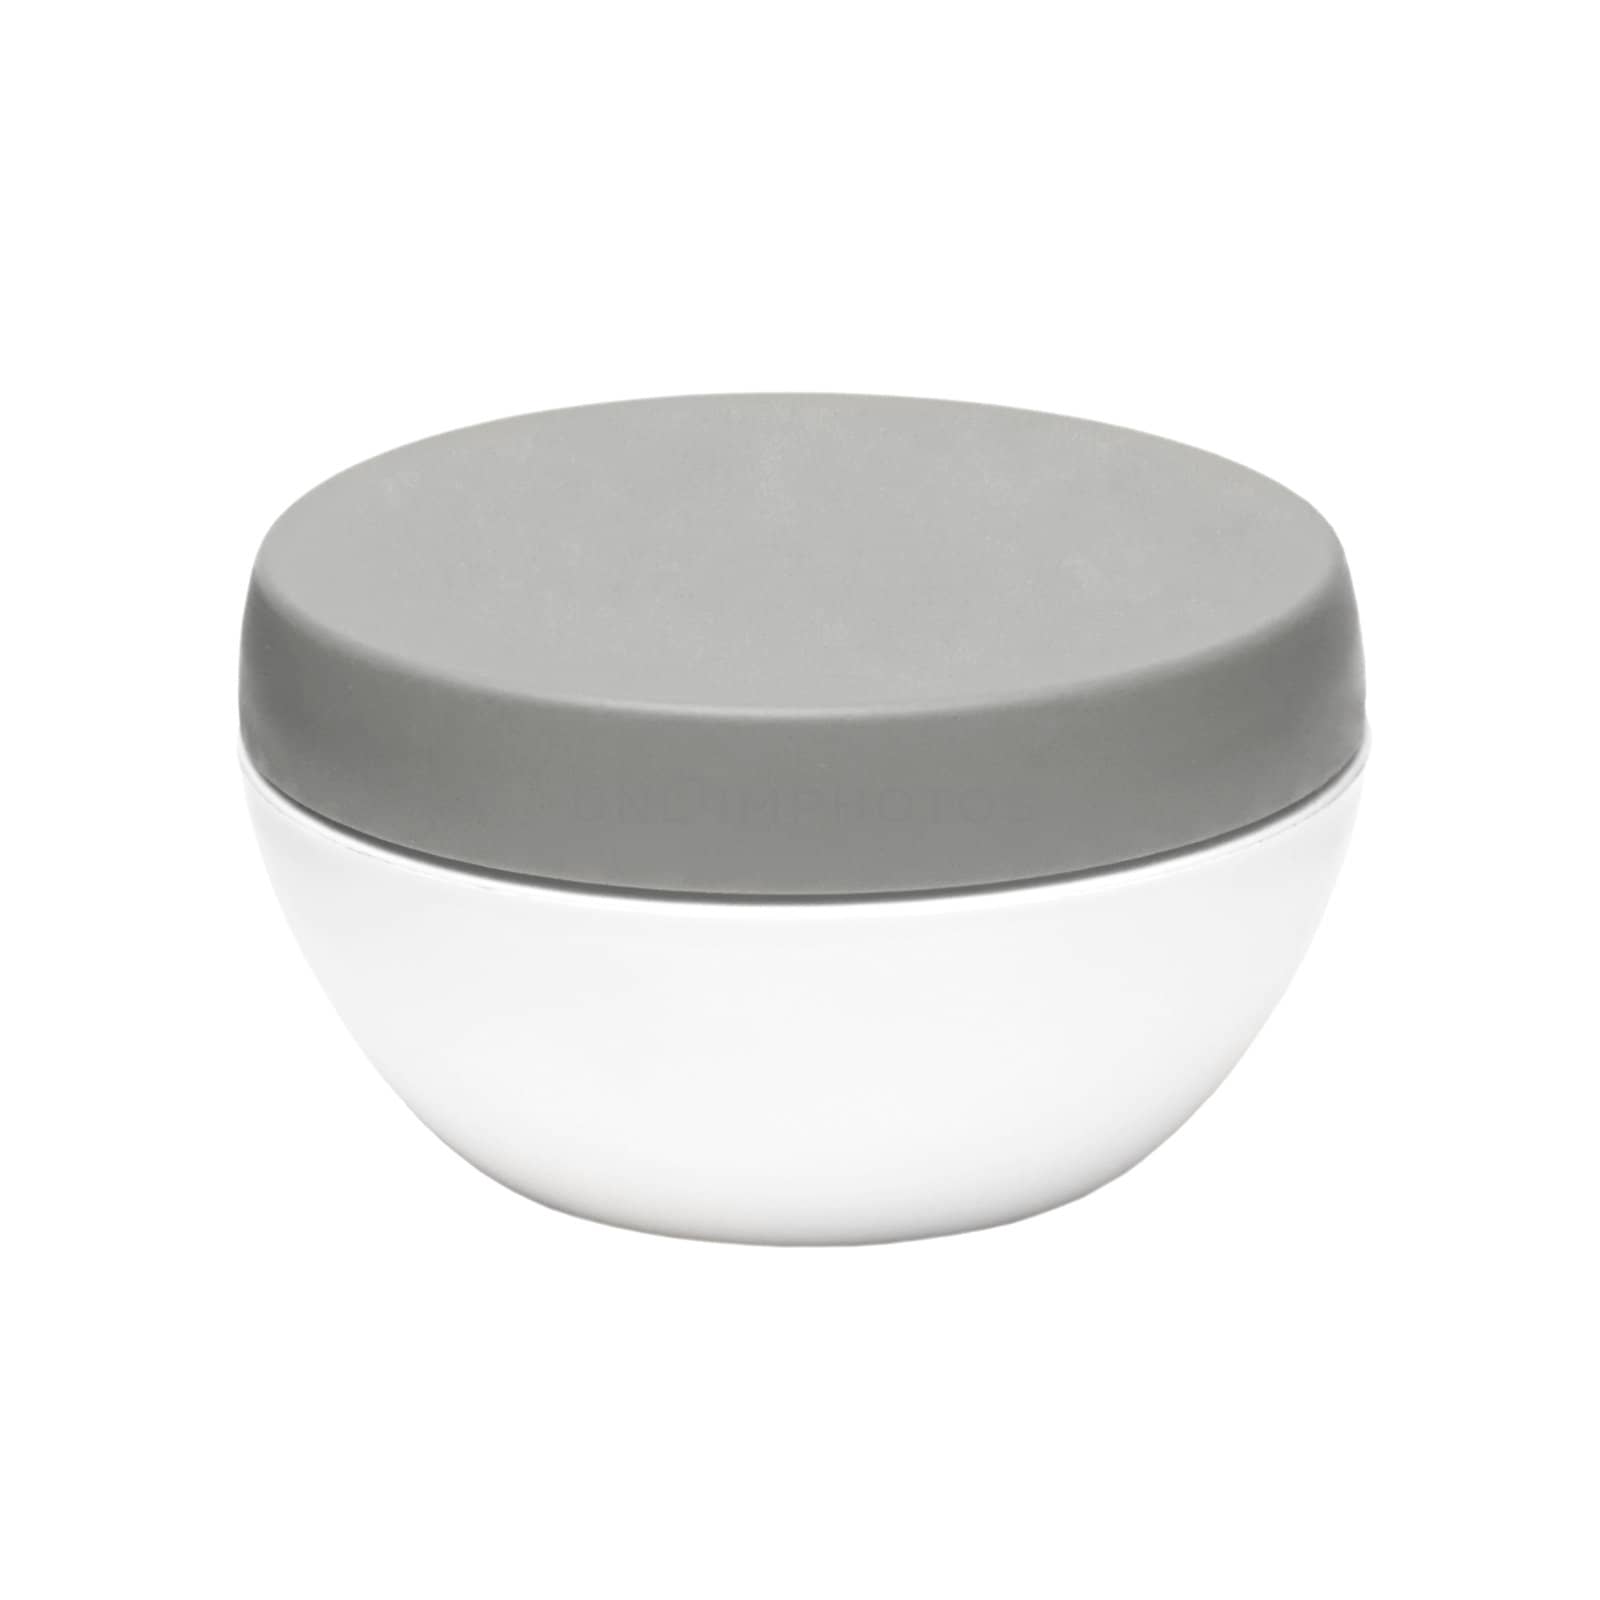 white plastic jar with a dark cap  by Plus69